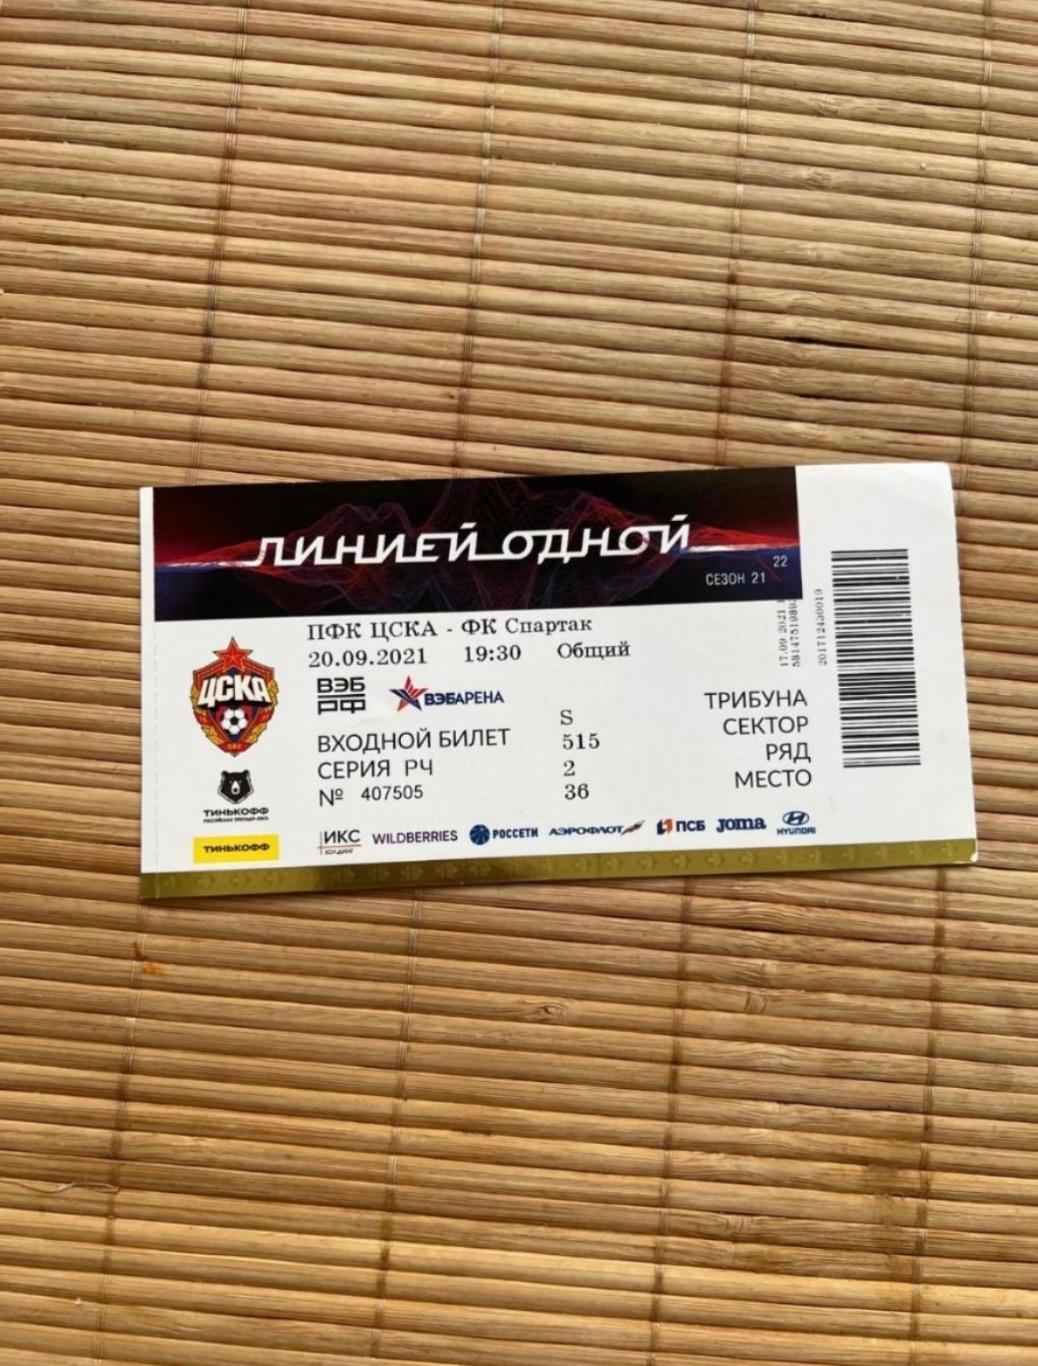 Цска - Спартак Москва 20.09.2021 билет